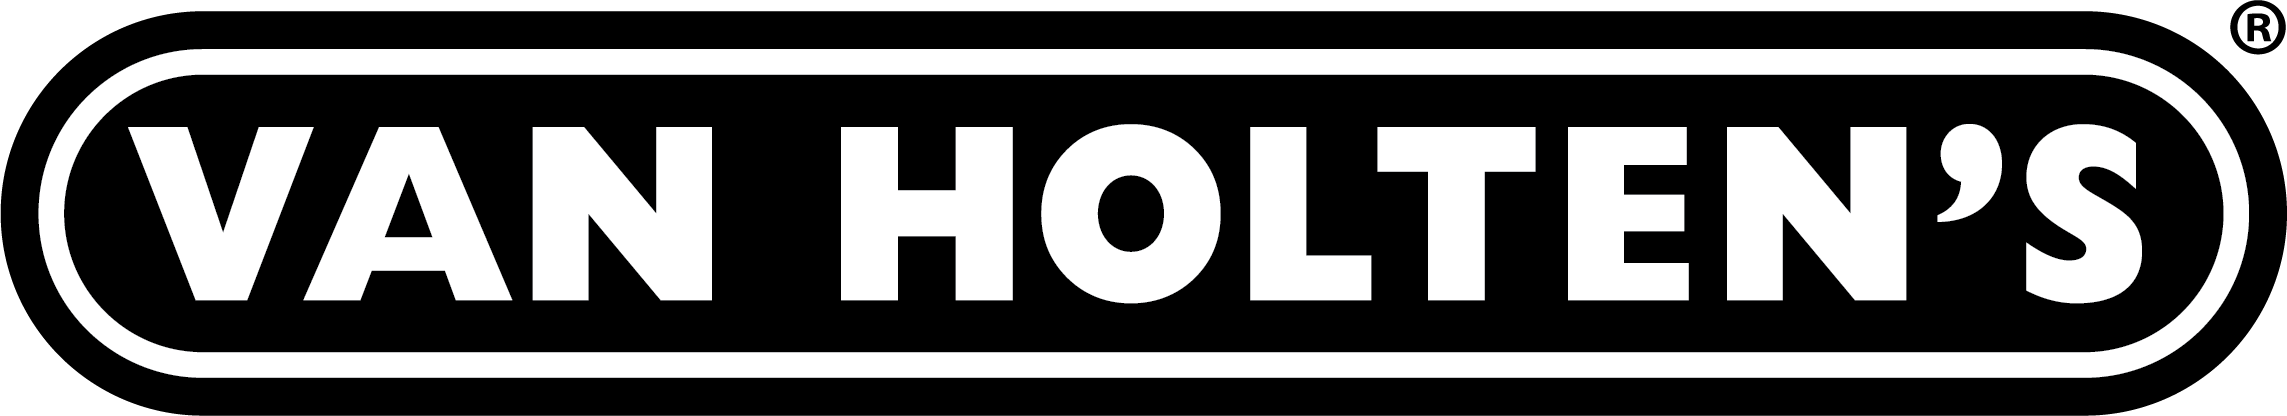 Van Holten's Logo